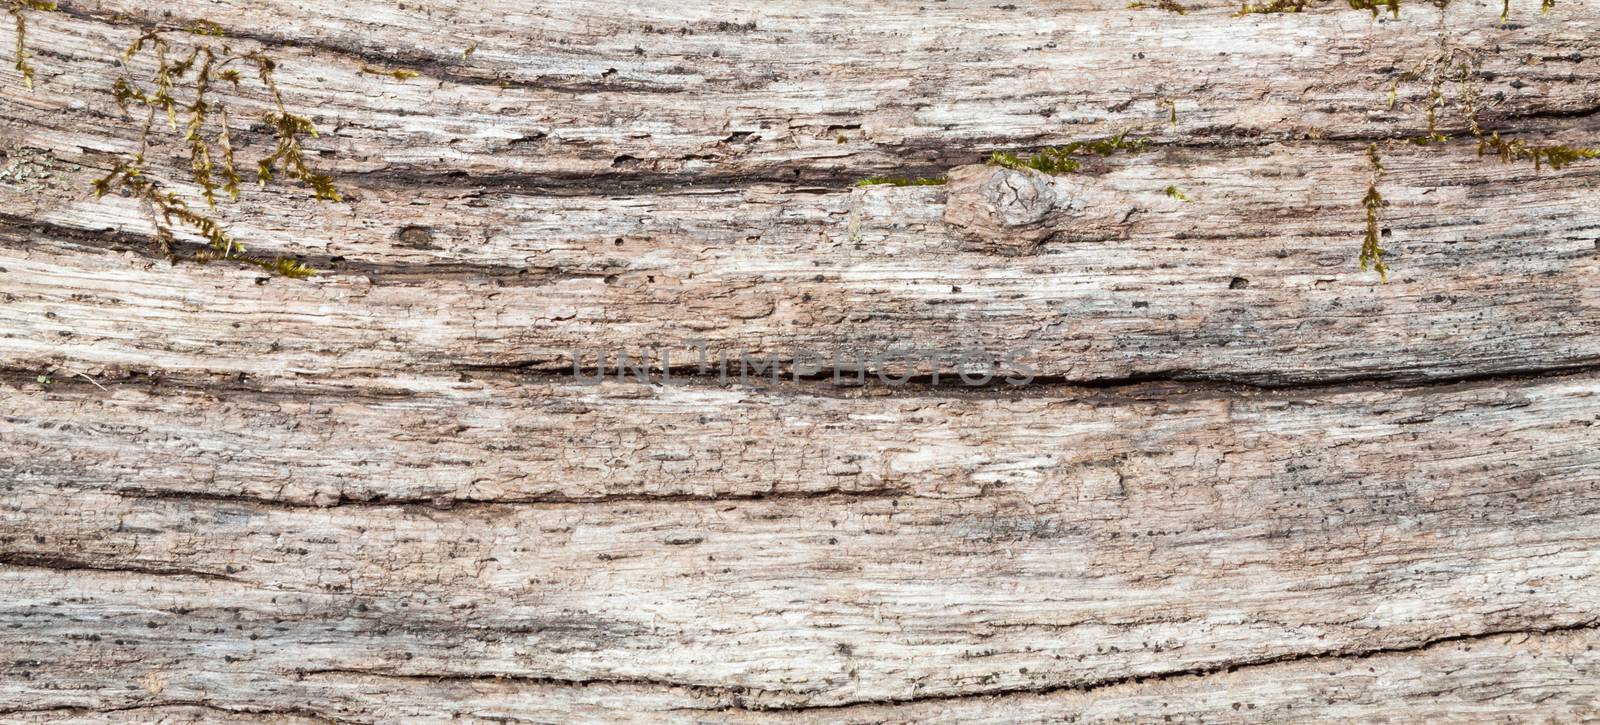 Wood grain bark texture by TravisPhotoWorks